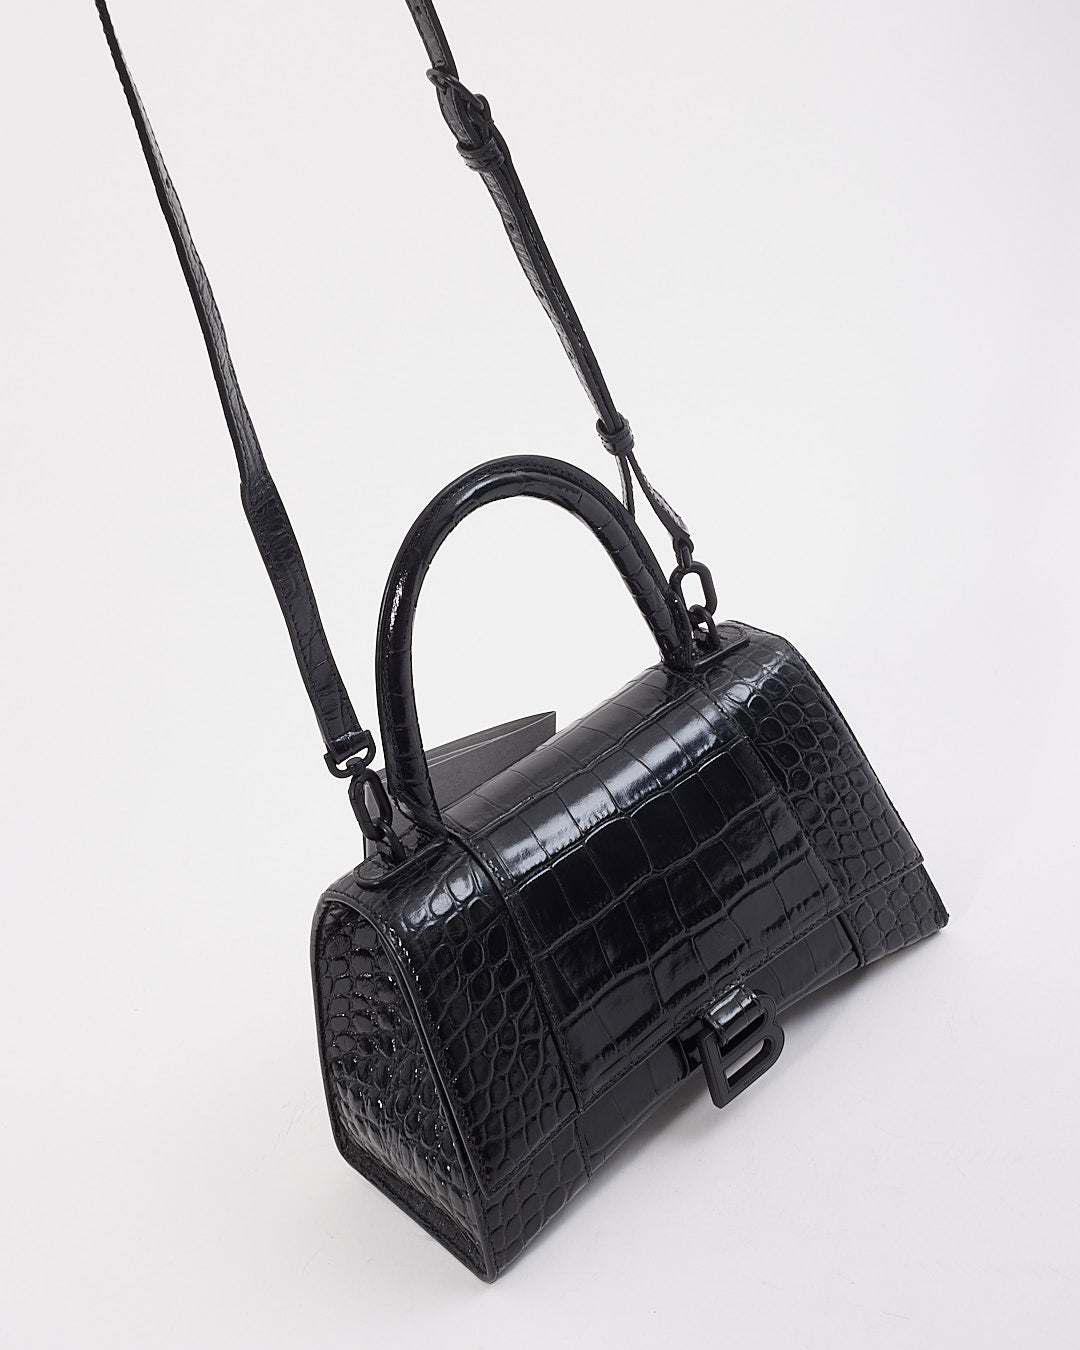 Balenciaga Petit sac sablier en cuir embossé croco noir sur noir